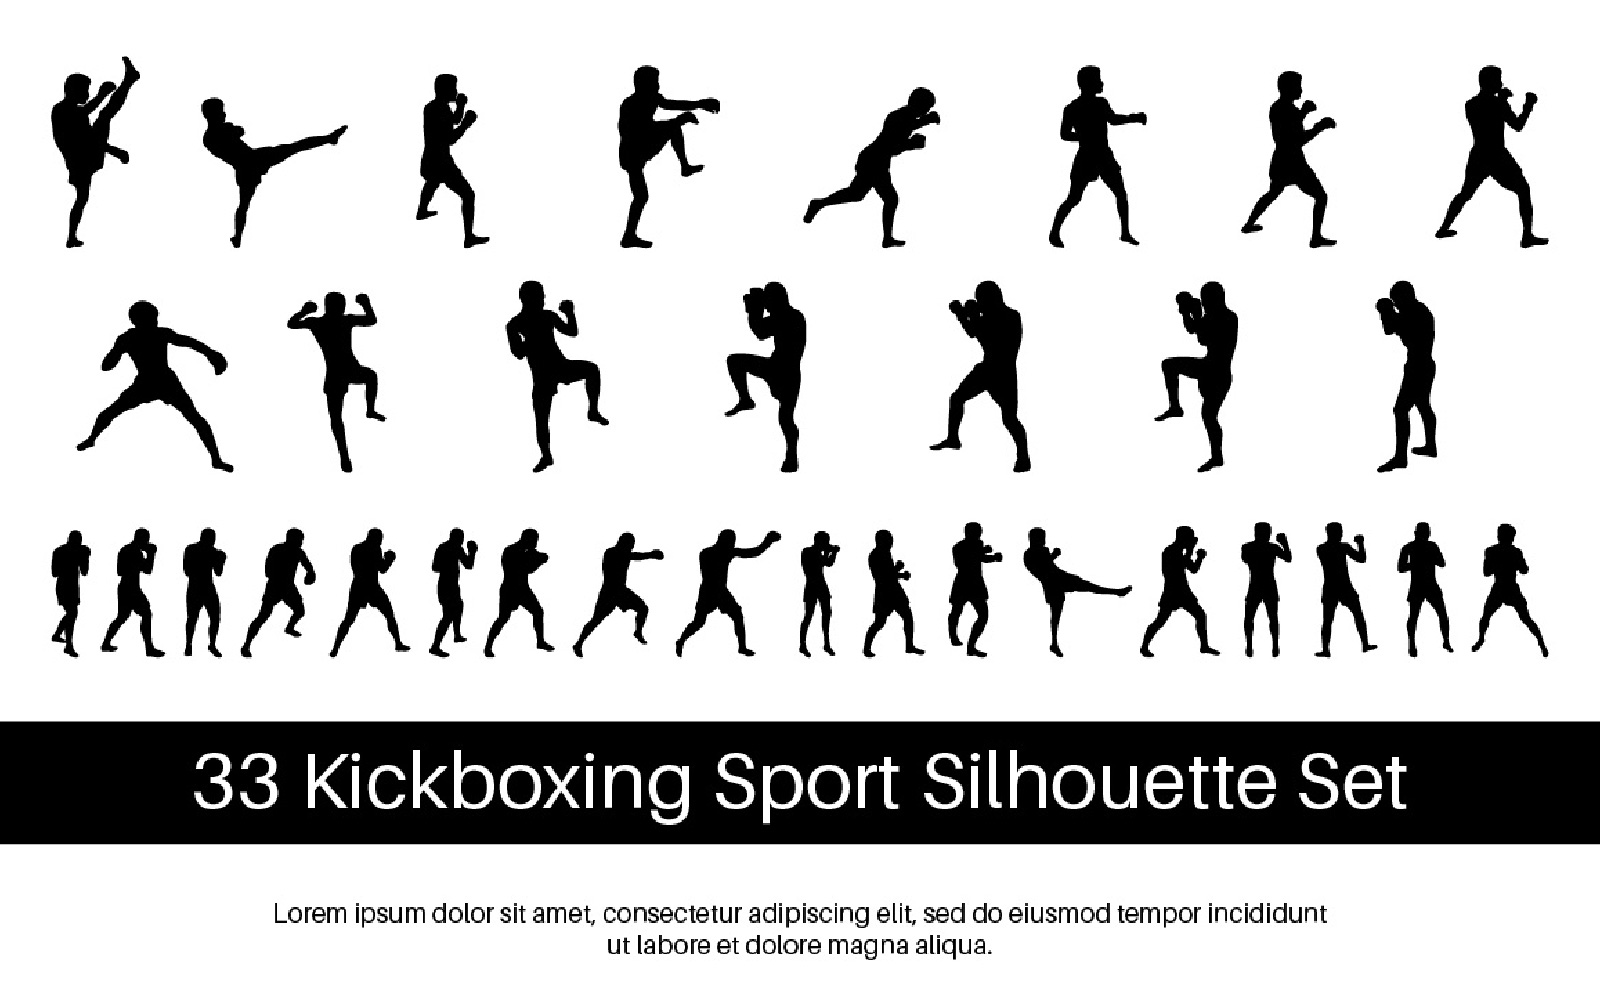 33 Kickboxing Sport Silhouette Set